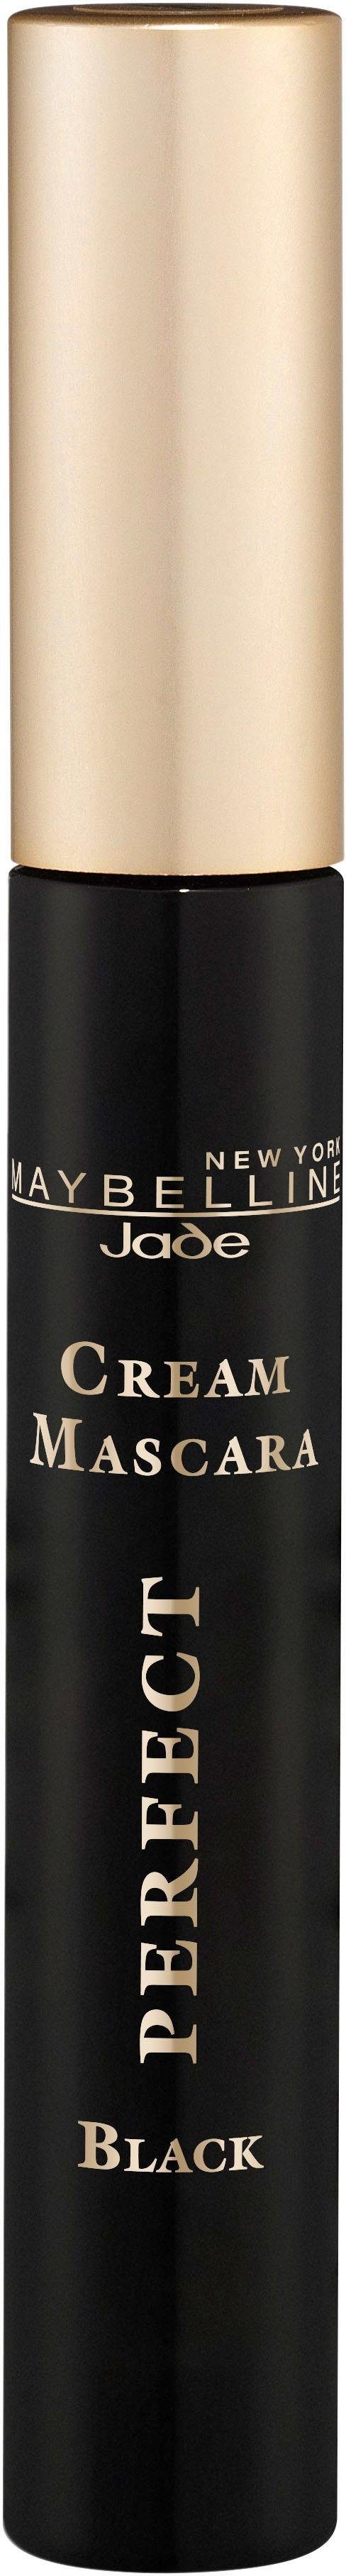 MAYBELLINE NEW YORK Mascara Cream Mascara, Mit pflegendem Protein